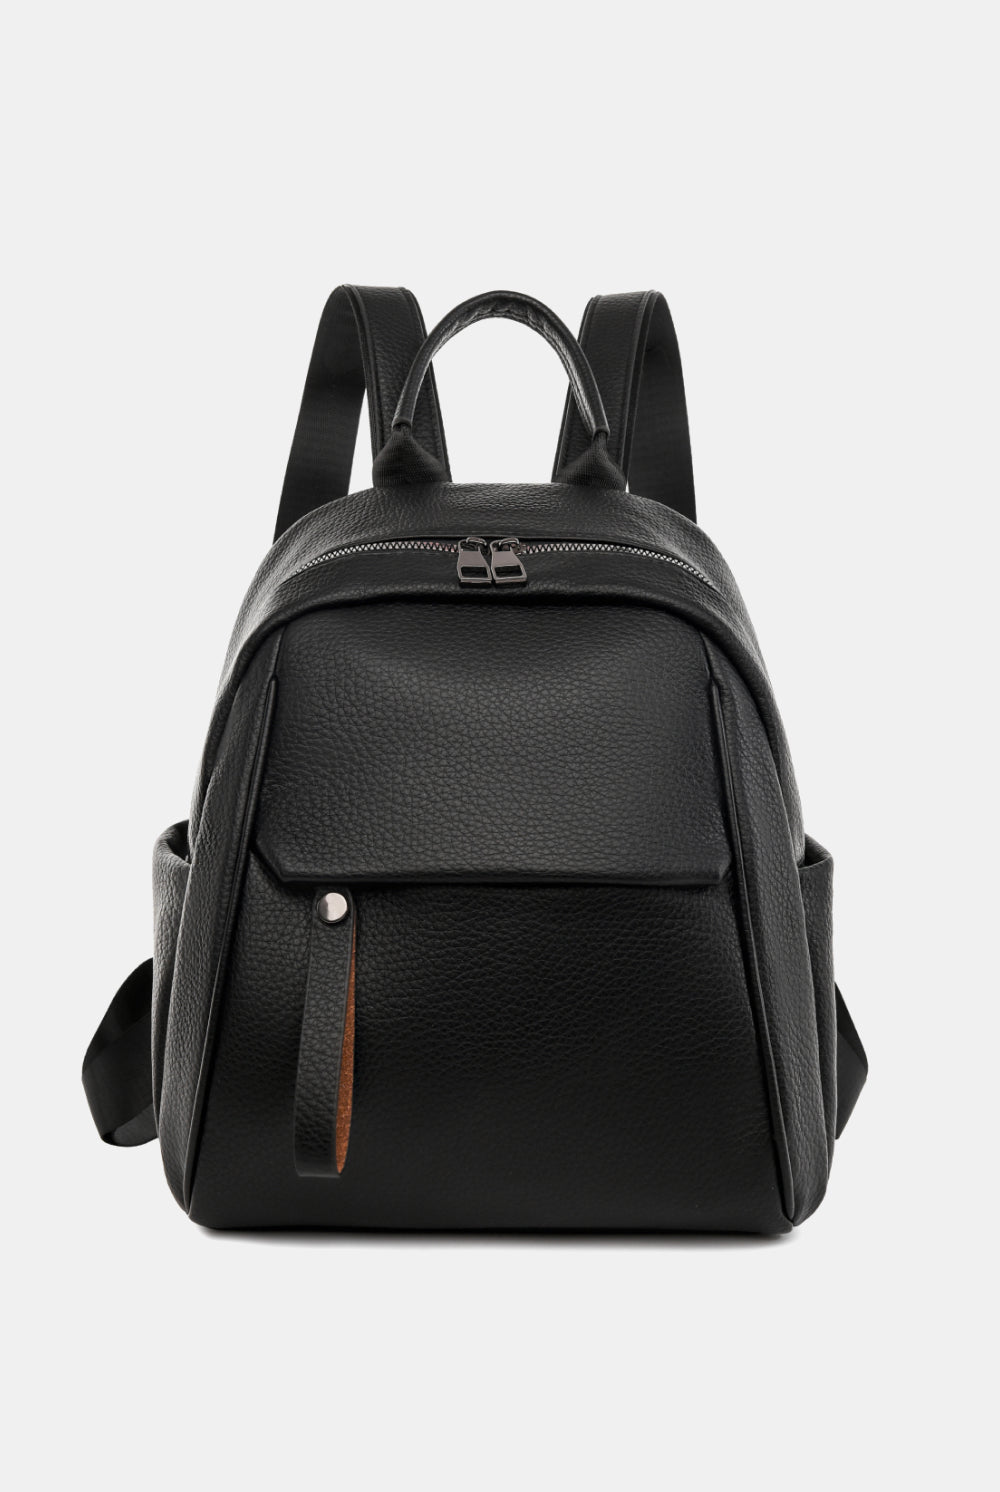 White Smoke Medium PU Leather Backpack Handbags